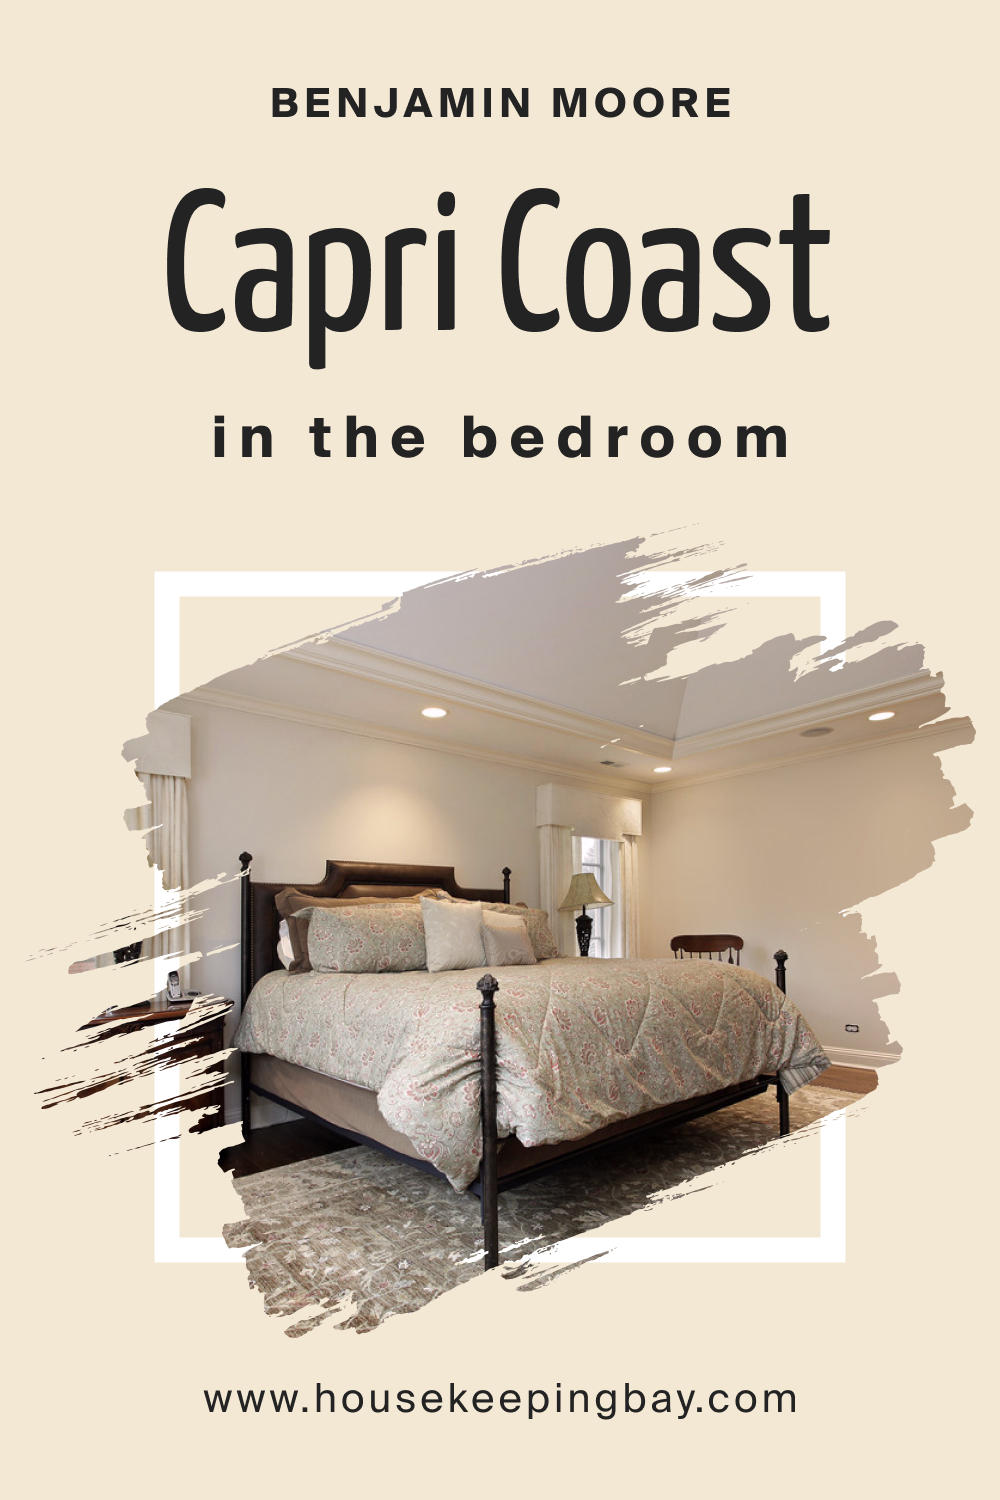 Benjamin Moore. Capri Coast OC 87 for the Bedroom